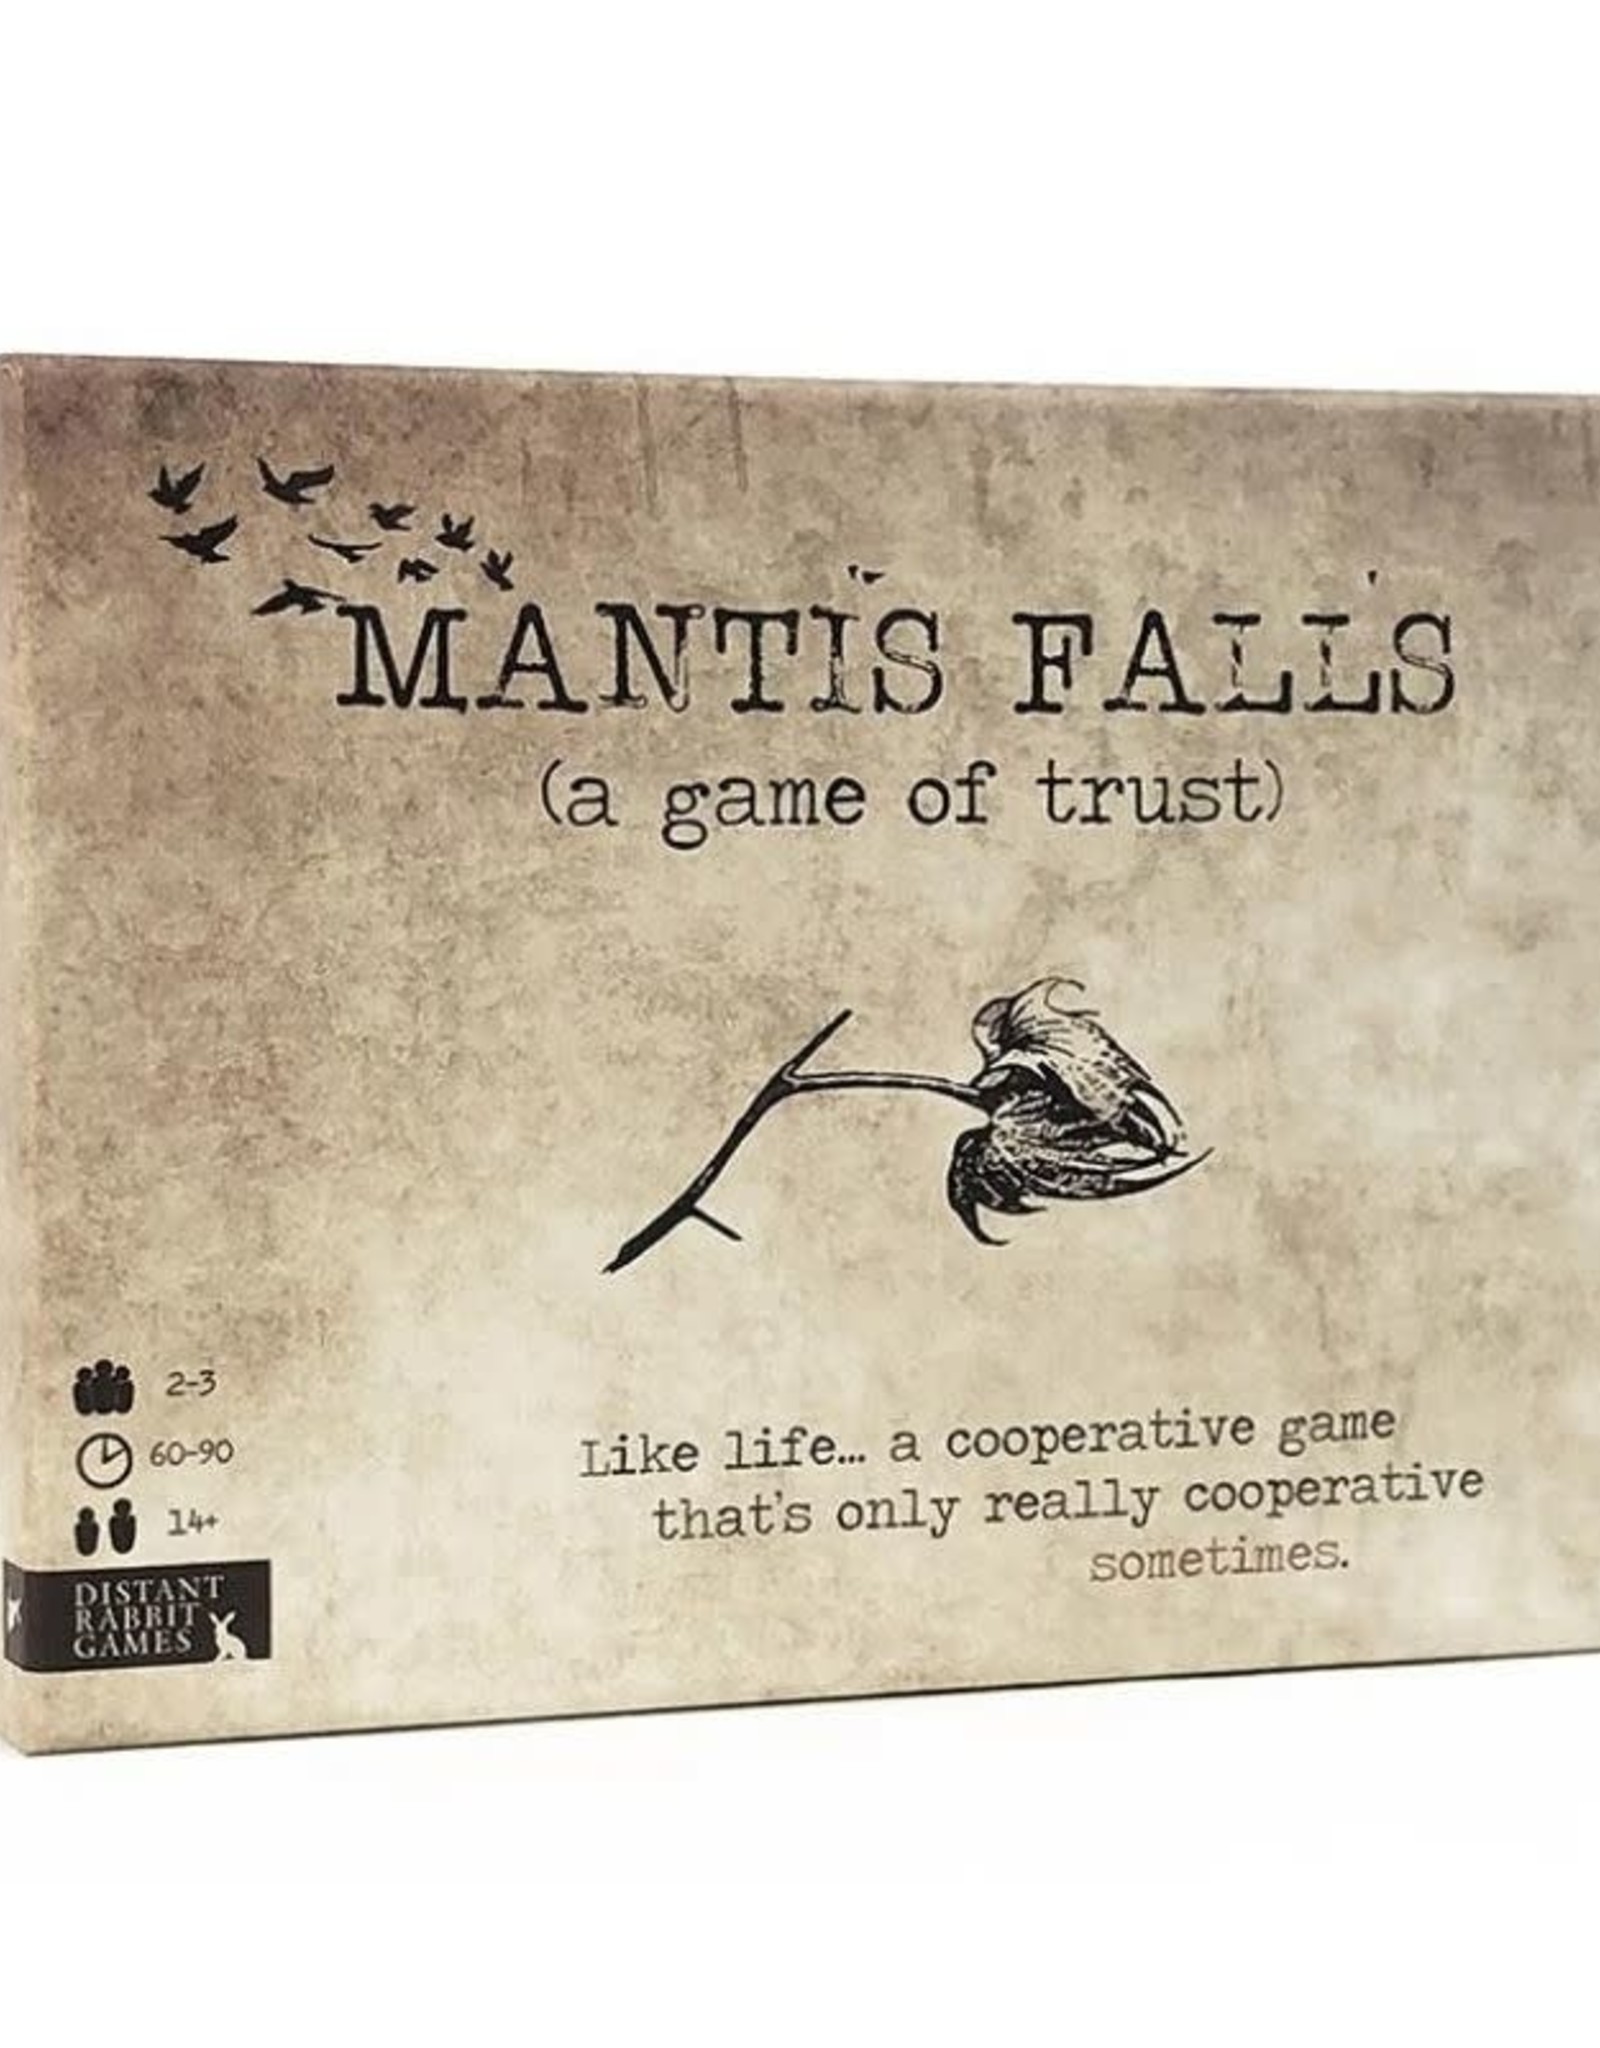 Distant Rabbit Games Mantis Falls: A Game of Trust